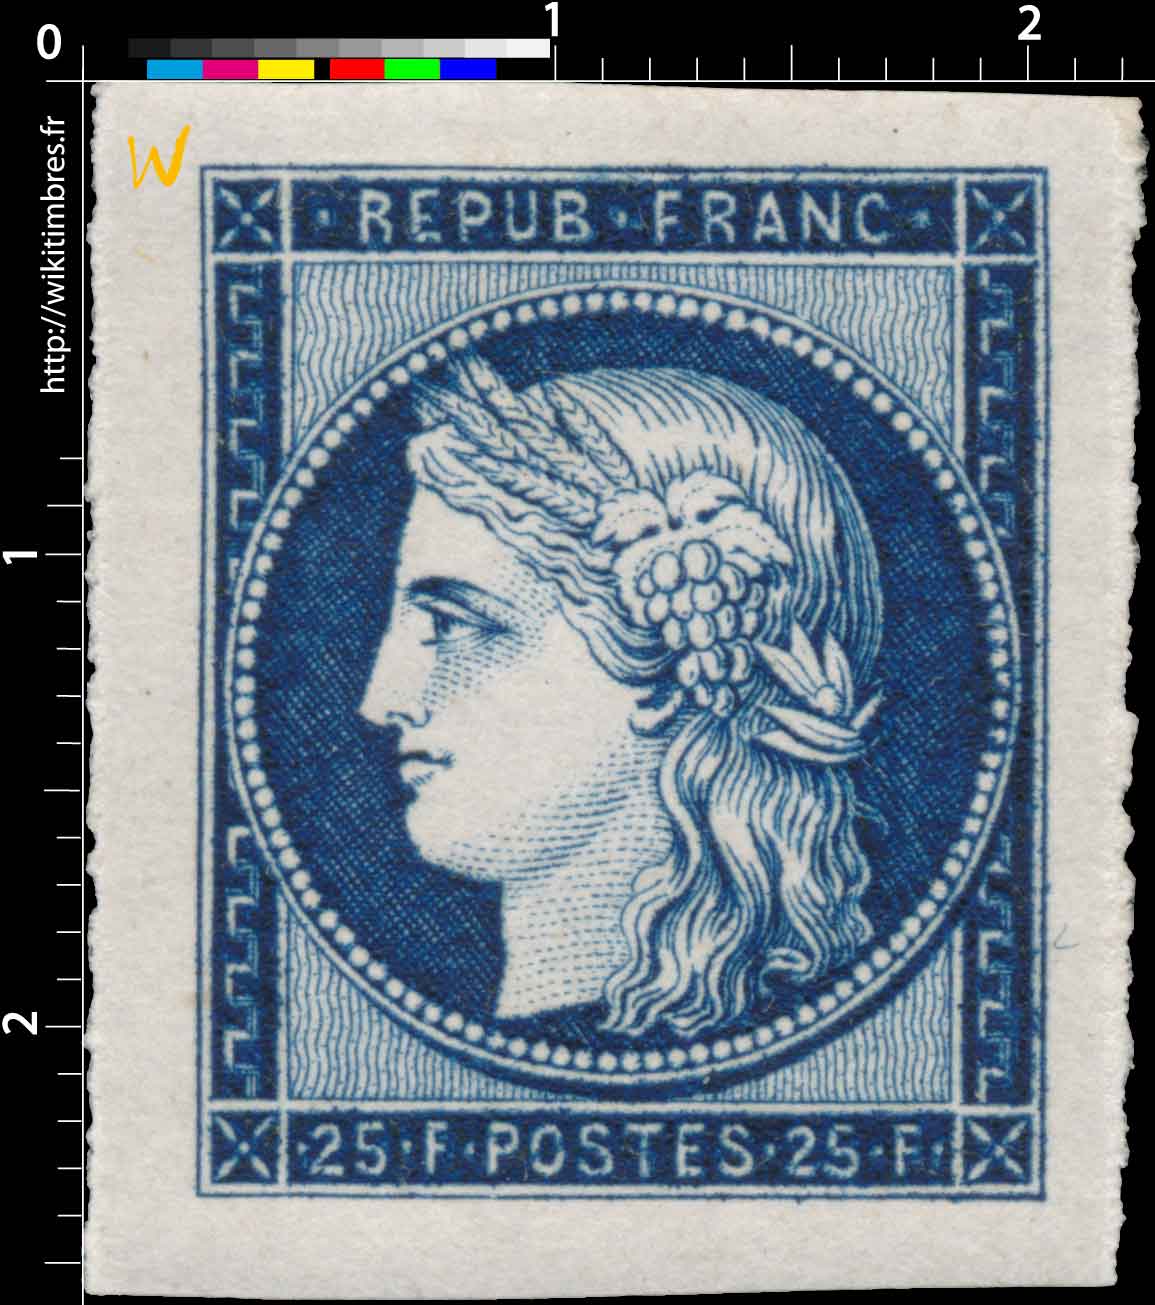 REPUB - FRANC - type Cérès